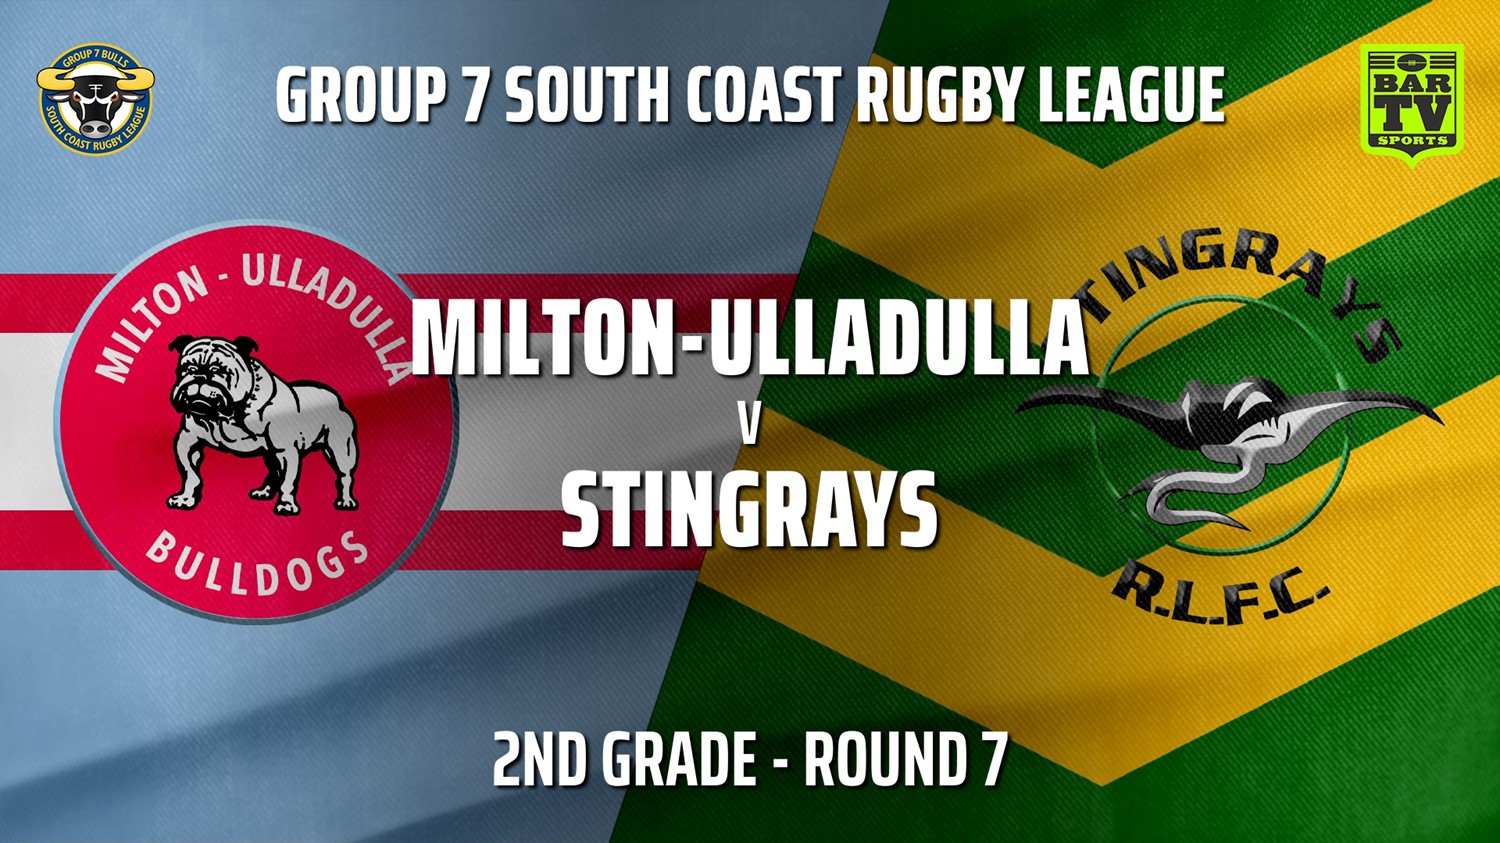 210530-Group 7 RL Round 7 - 2nd Grade - Milton-Ulladulla Bulldogs v Stingrays of Shellharbour Slate Image